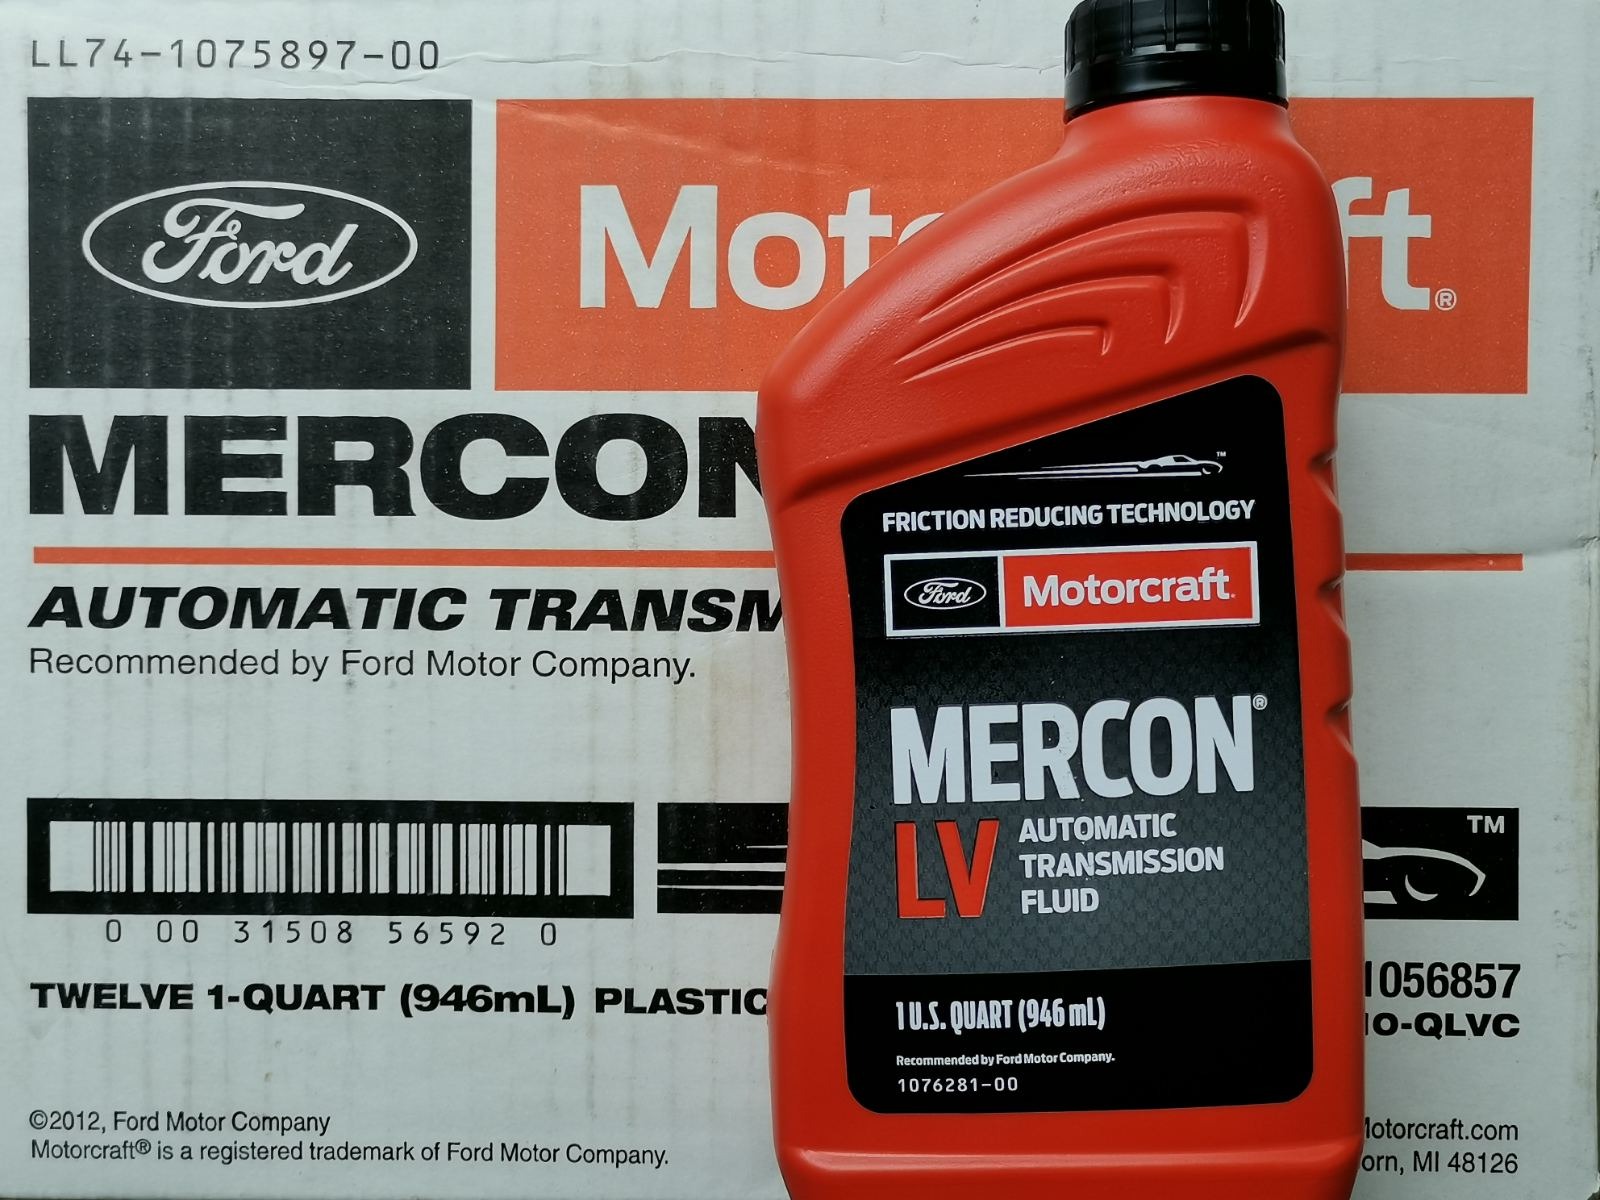 100% Original) 1 SET FOR 5 BOTOL Ford MotorCraft Mercon LV Automatic  Transmission Fluid ATF (1 Quart / 946ml ) FORD RANGER T6 XT-10-QLVC